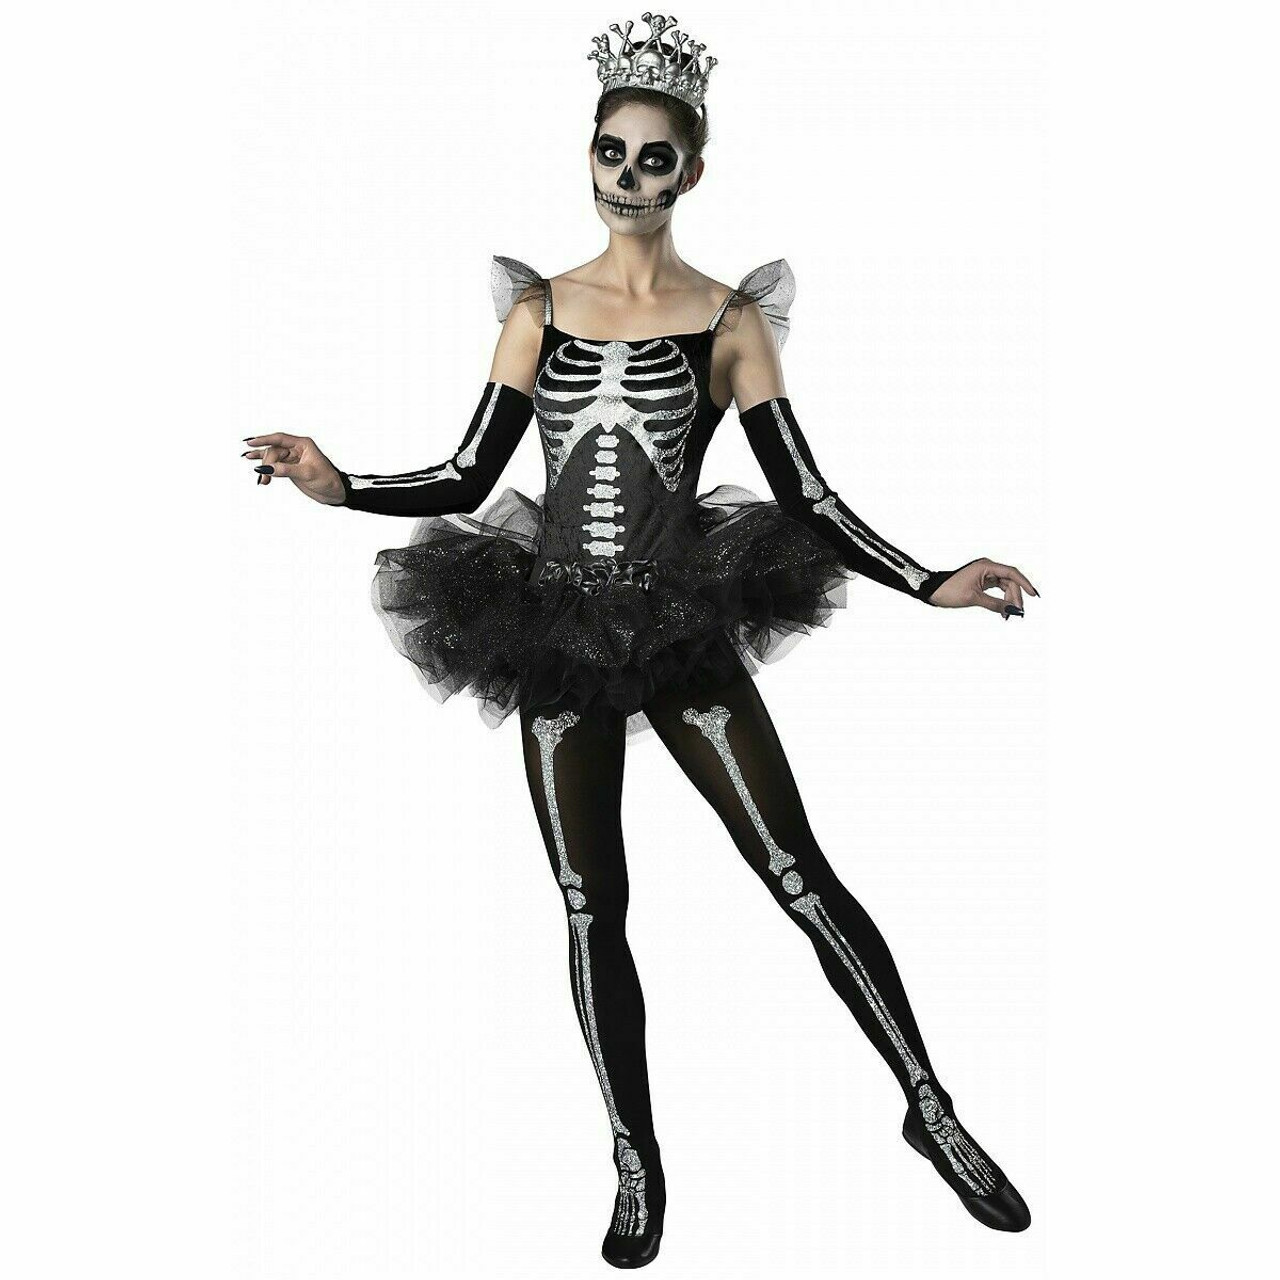 Buy AOTHSO Halloween Girls Glow In The Dark Skeleton Costume Tutu